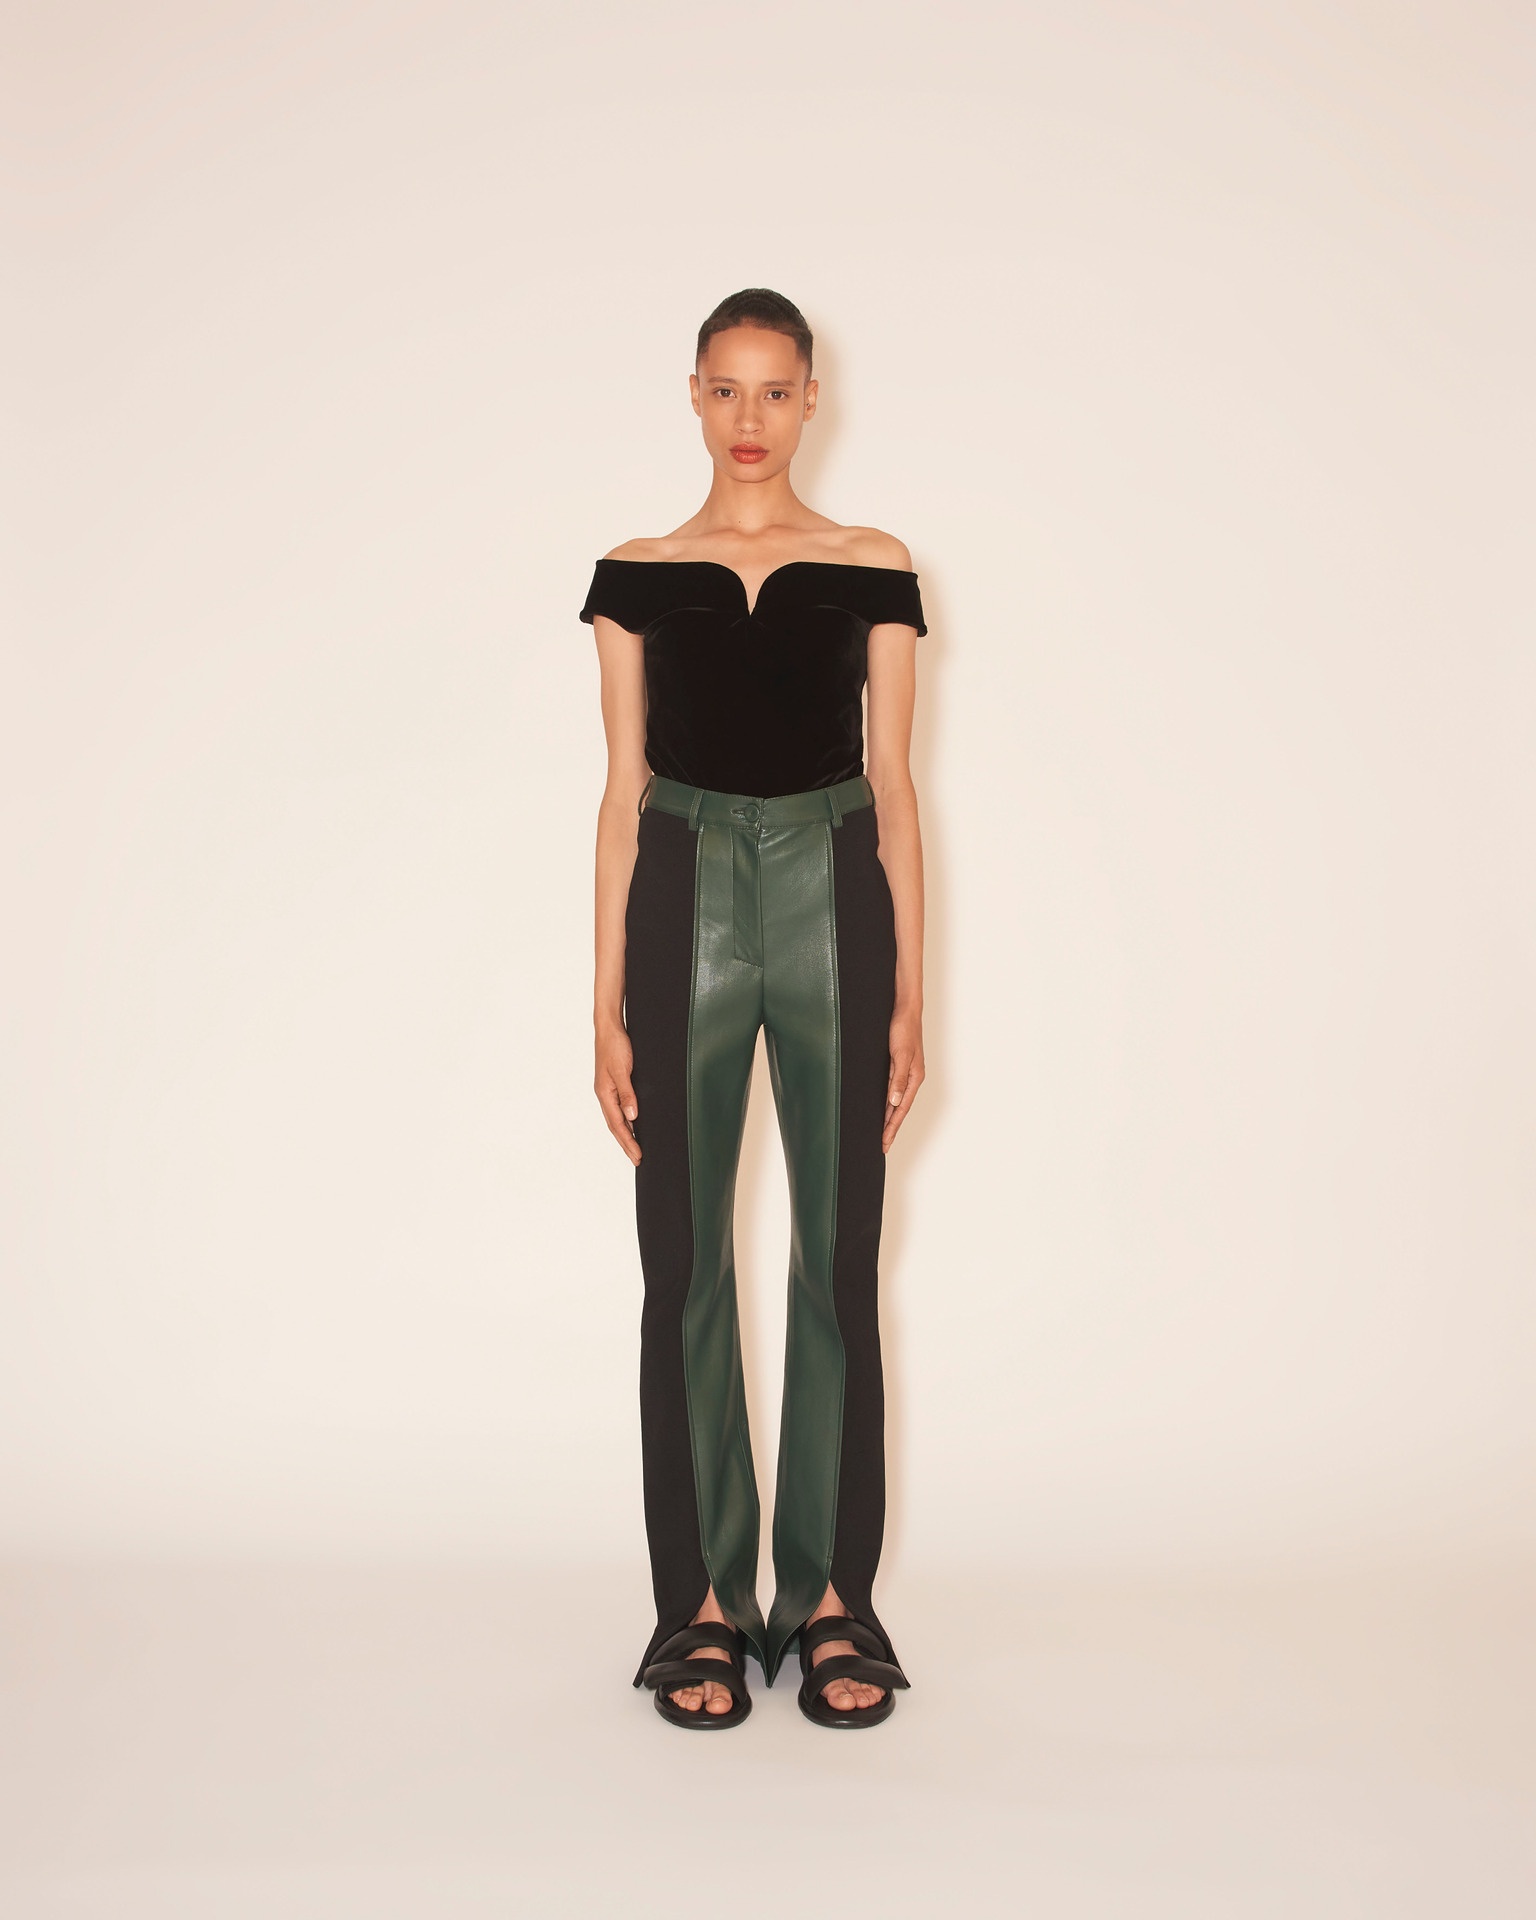 FILO - Contrast trouser - Pine green/black - 1